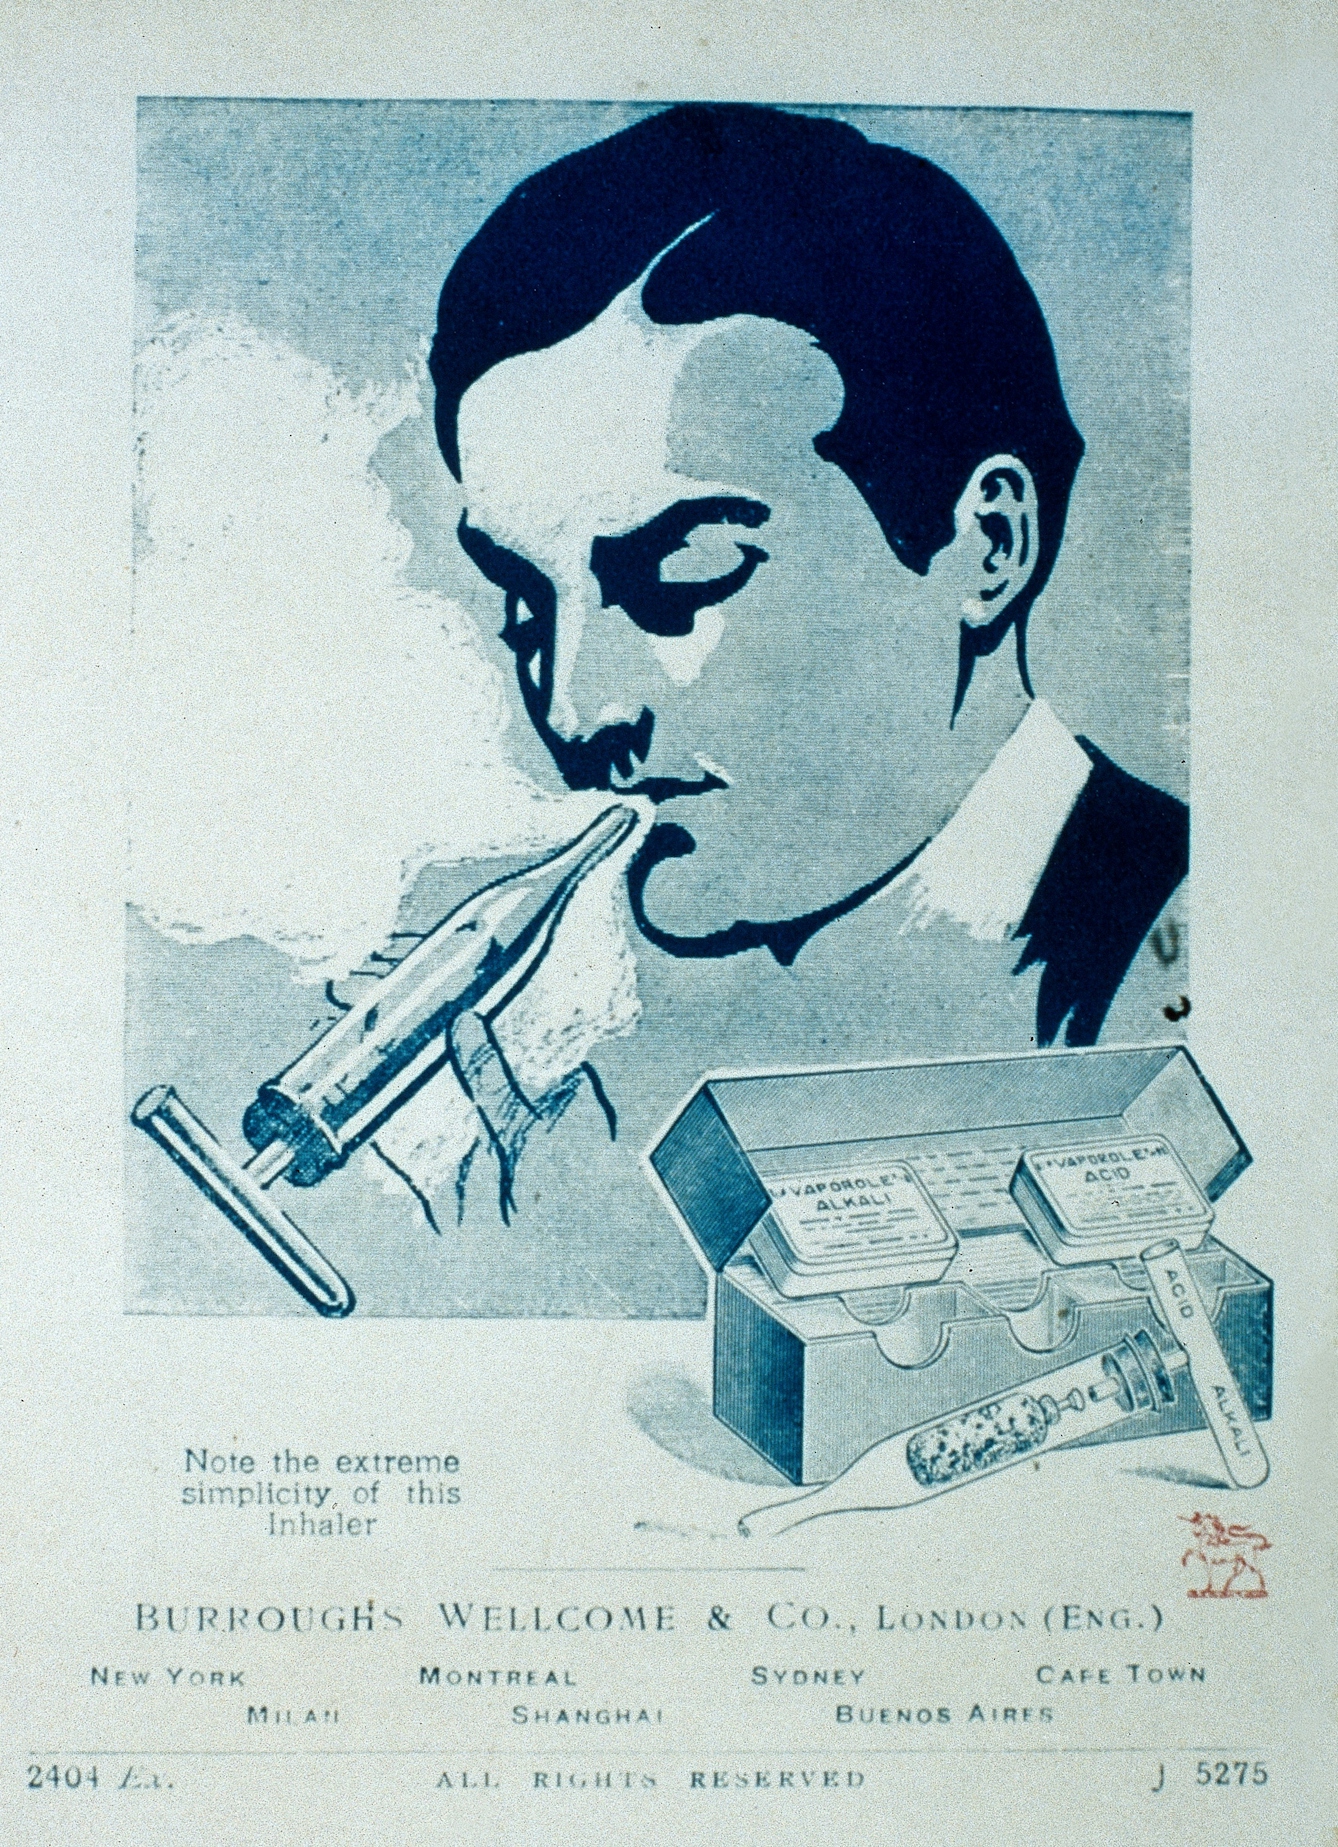 Advertisement for a Burroughs Wellcome inhaler.